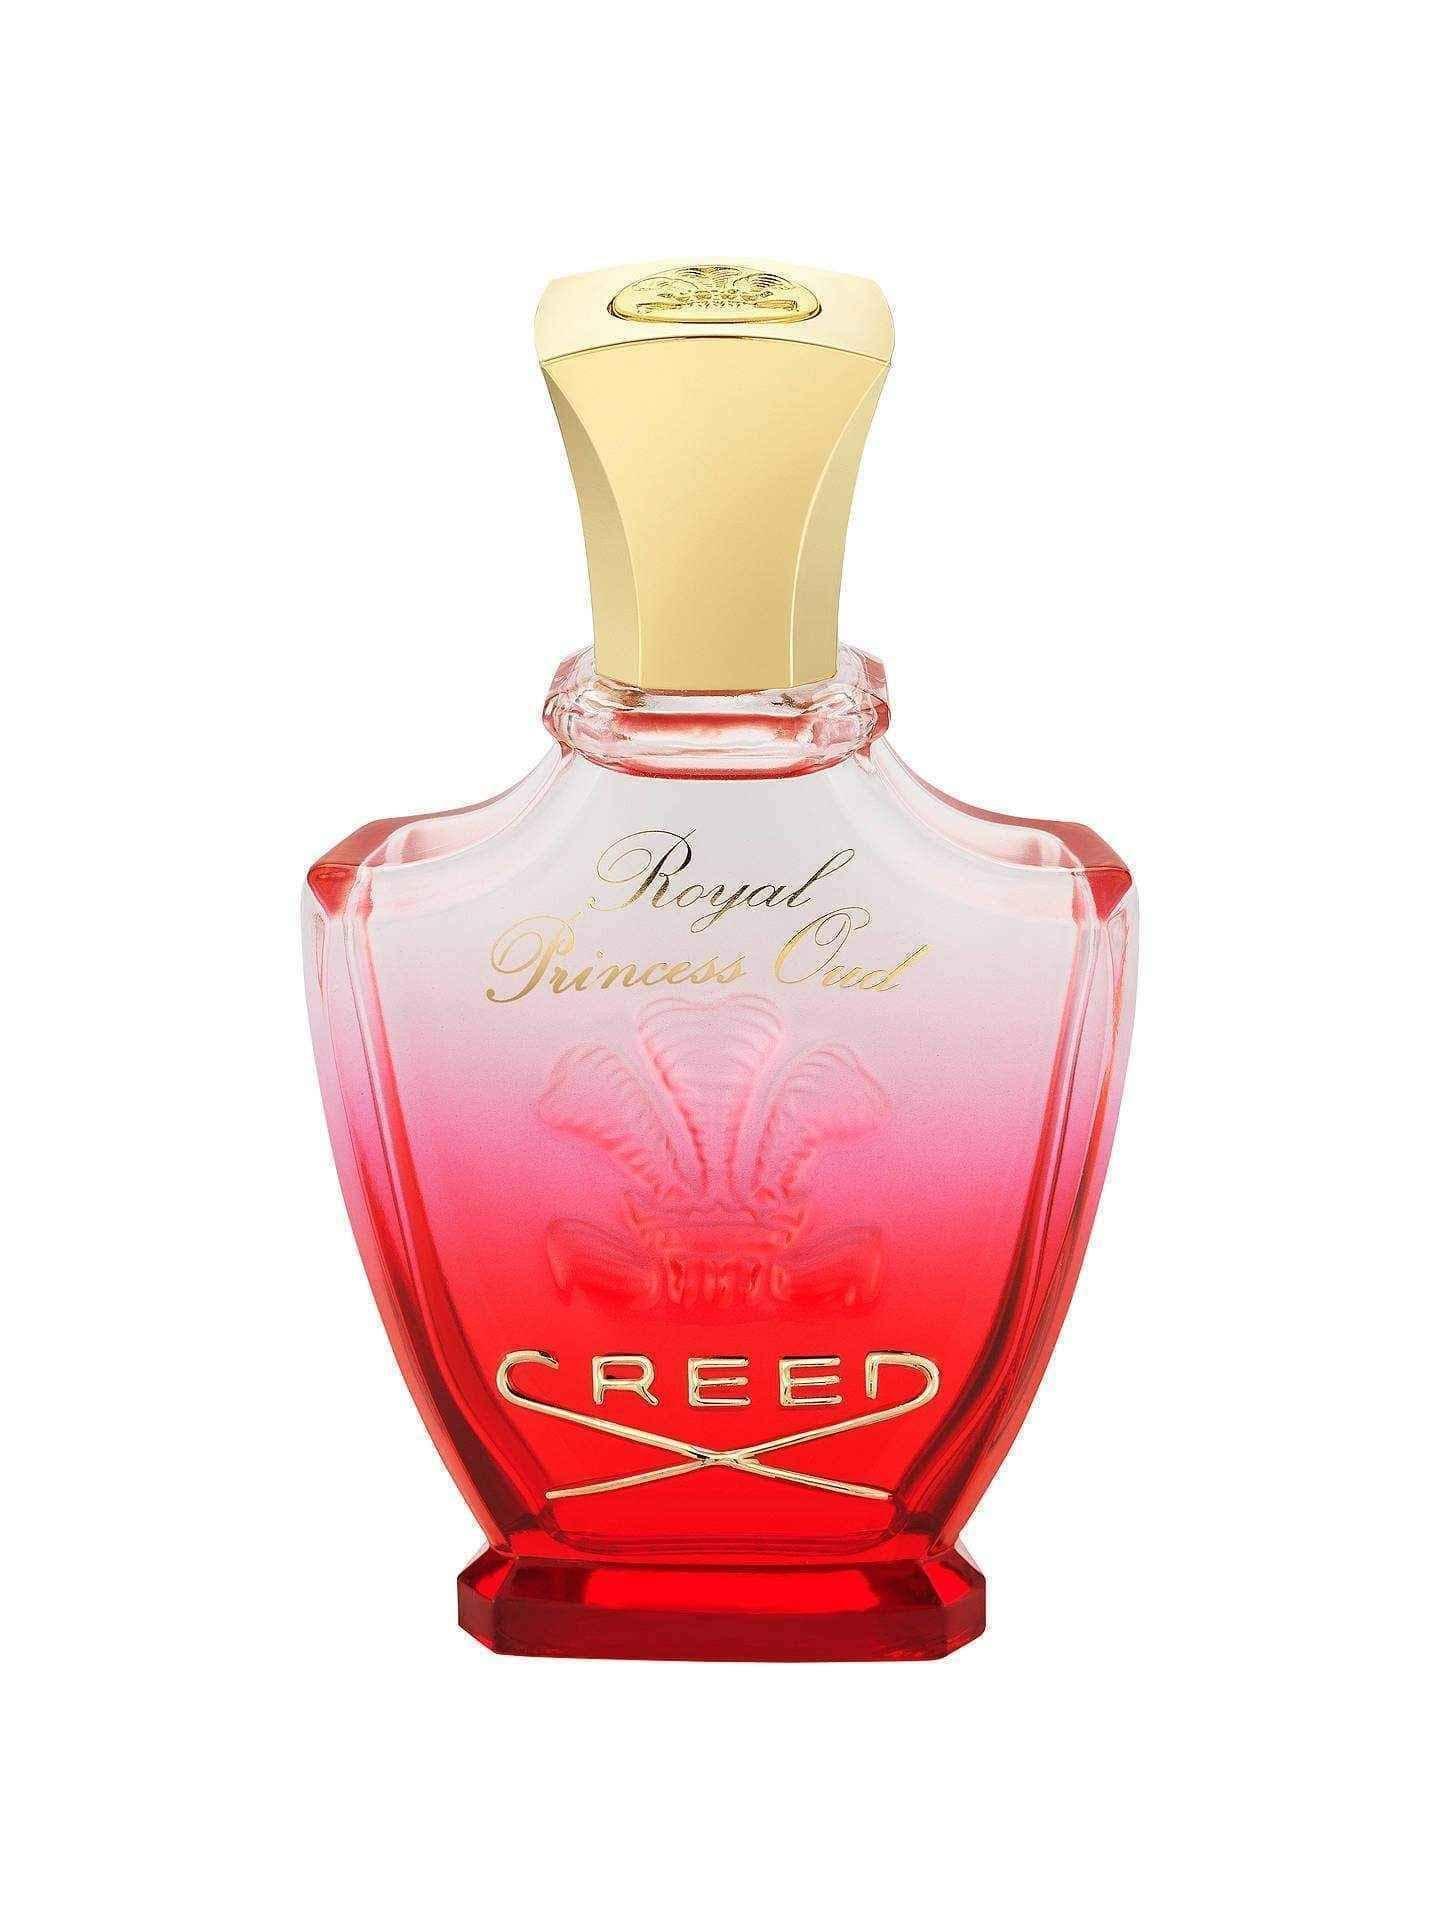 Creed Royal Princess Oud Eau de Parfum 75ml Spray UK